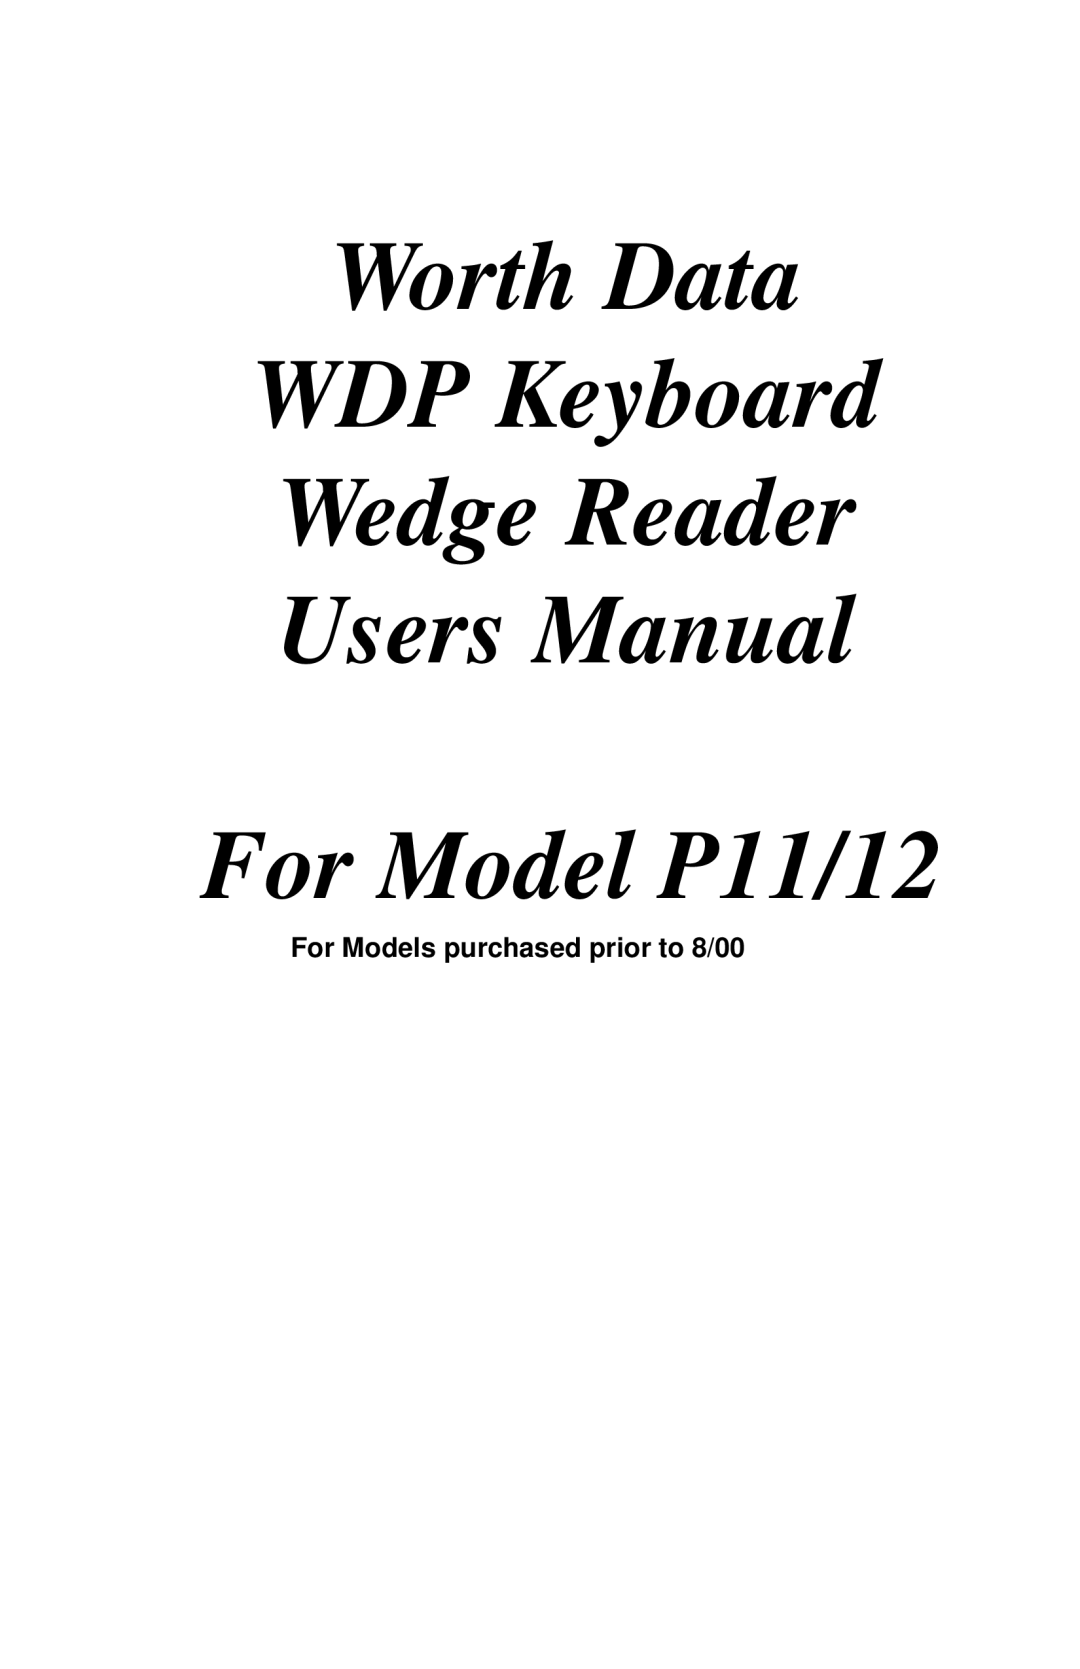 Worth Data user manual Worth Data WDP Keyboard Wedge Reader Users Manual For Model P11/12 